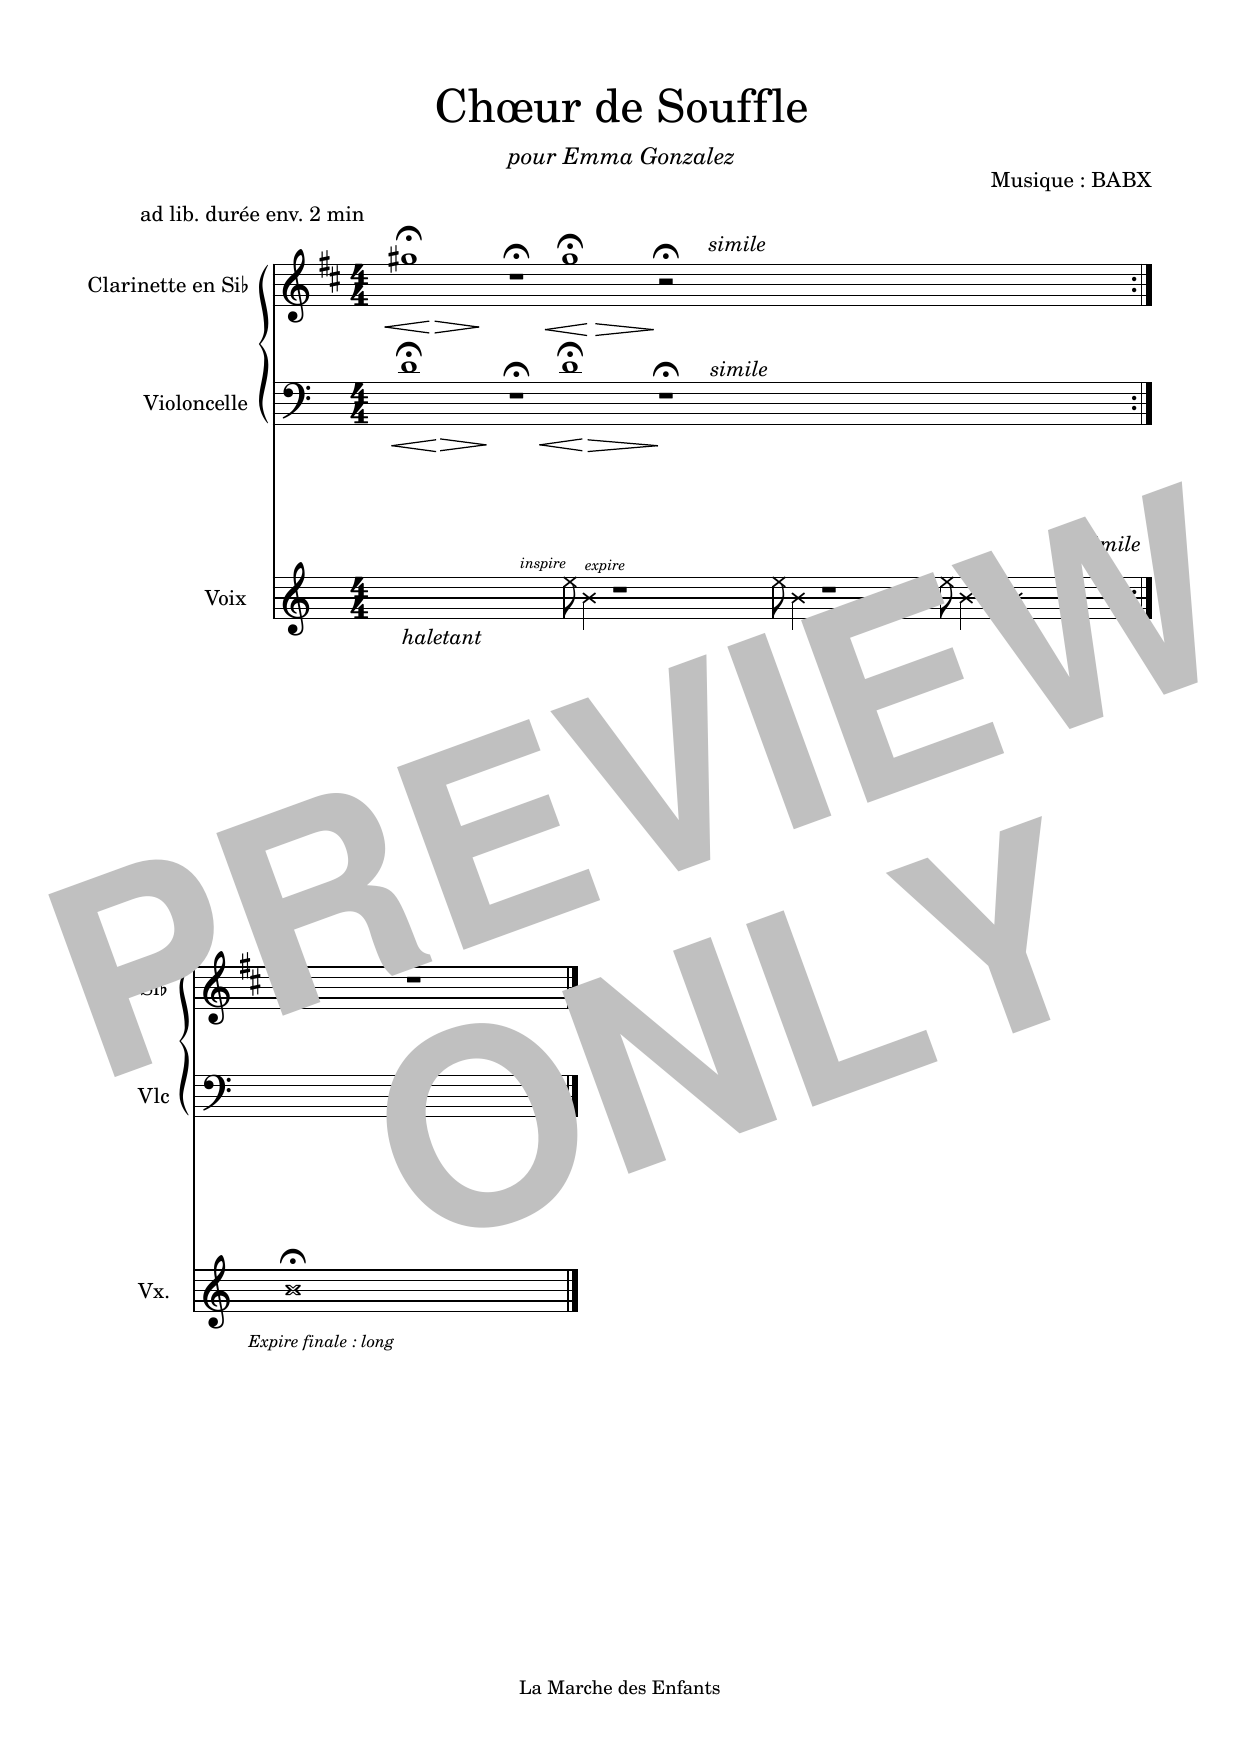 David Babin (Babx) Choeur De Souffle Sheet Music Notes & Chords for Choir - Download or Print PDF